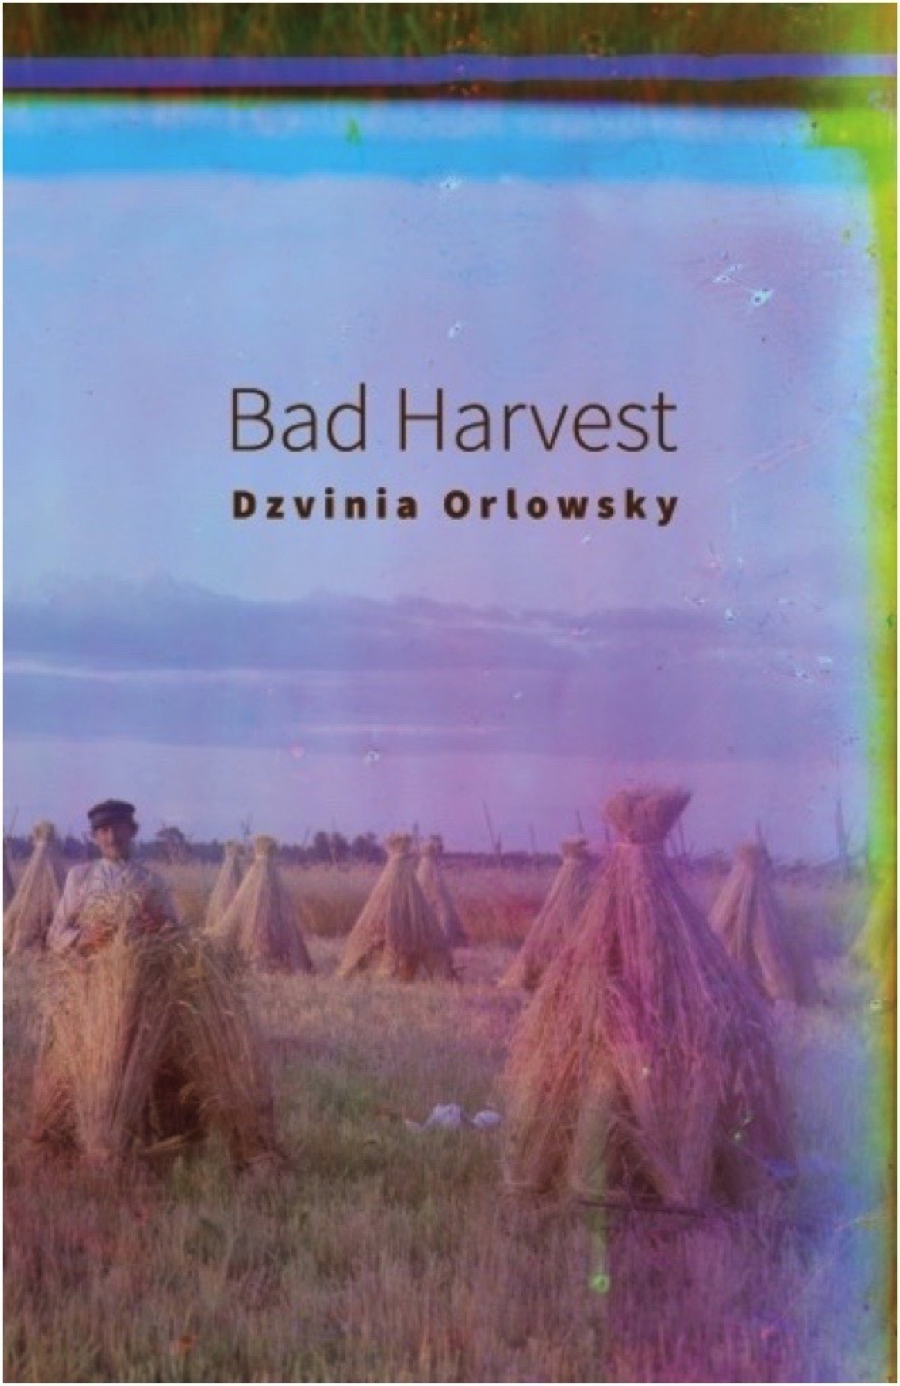 Dzvinia Orlowsky's Bad Harvest book cover